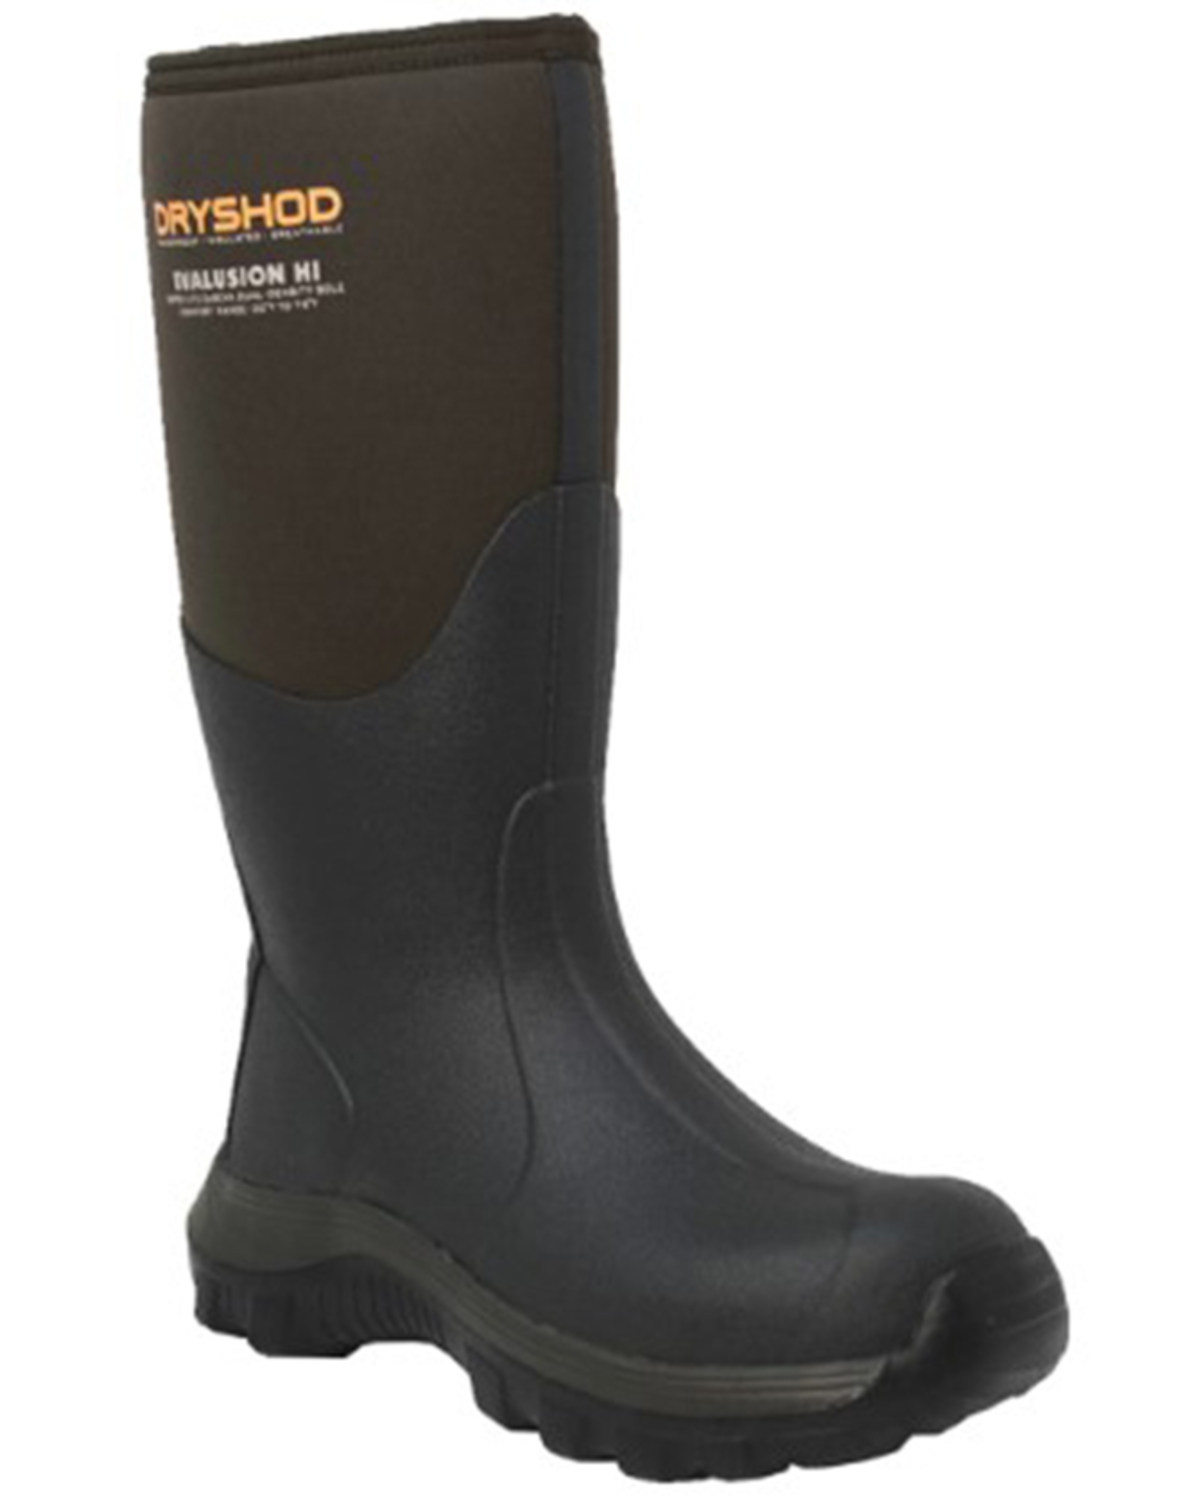 Dryshod Men's Evalusion Hi Outdoor Waterproof Work Boots - Round Toe